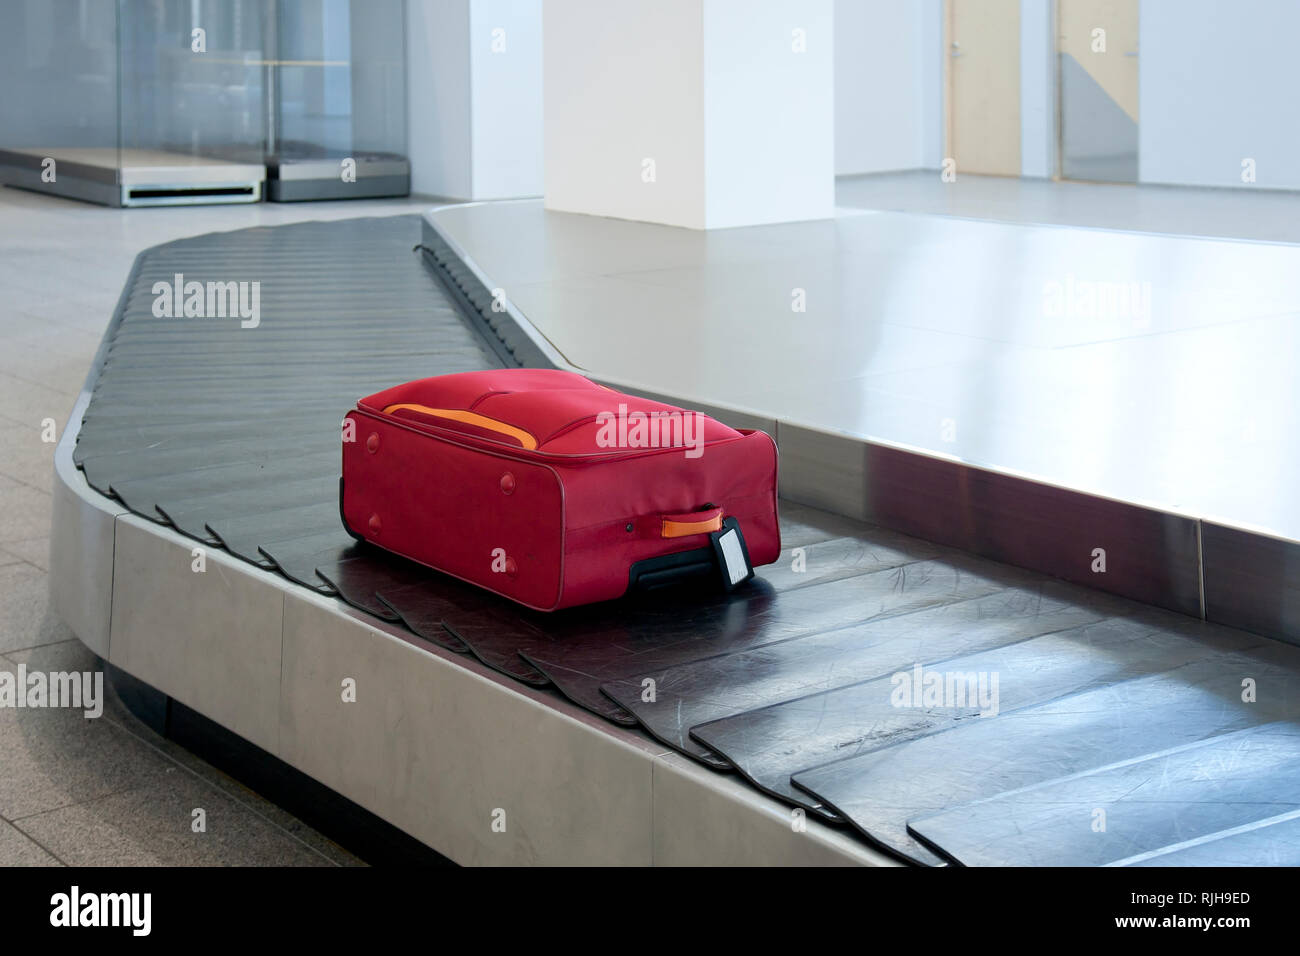 Suitcase on airport conveyor belt Stock Photo